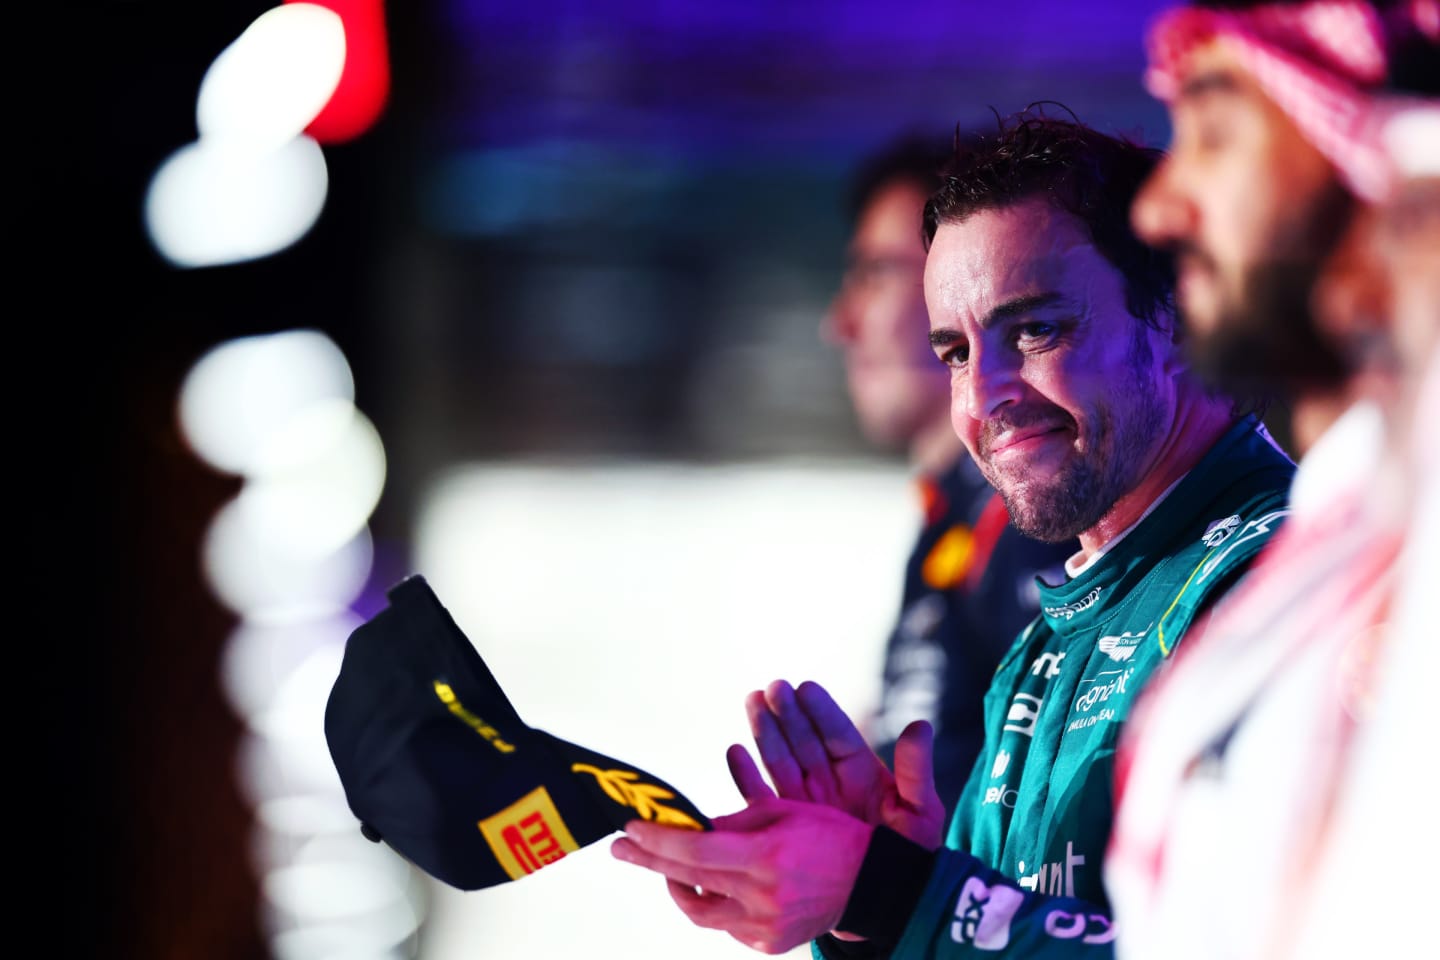 JEDDAH, SAUDI ARABIA - MARCH 19: Third placed Fernando Alonso of Spain and Aston Martin F1 Team